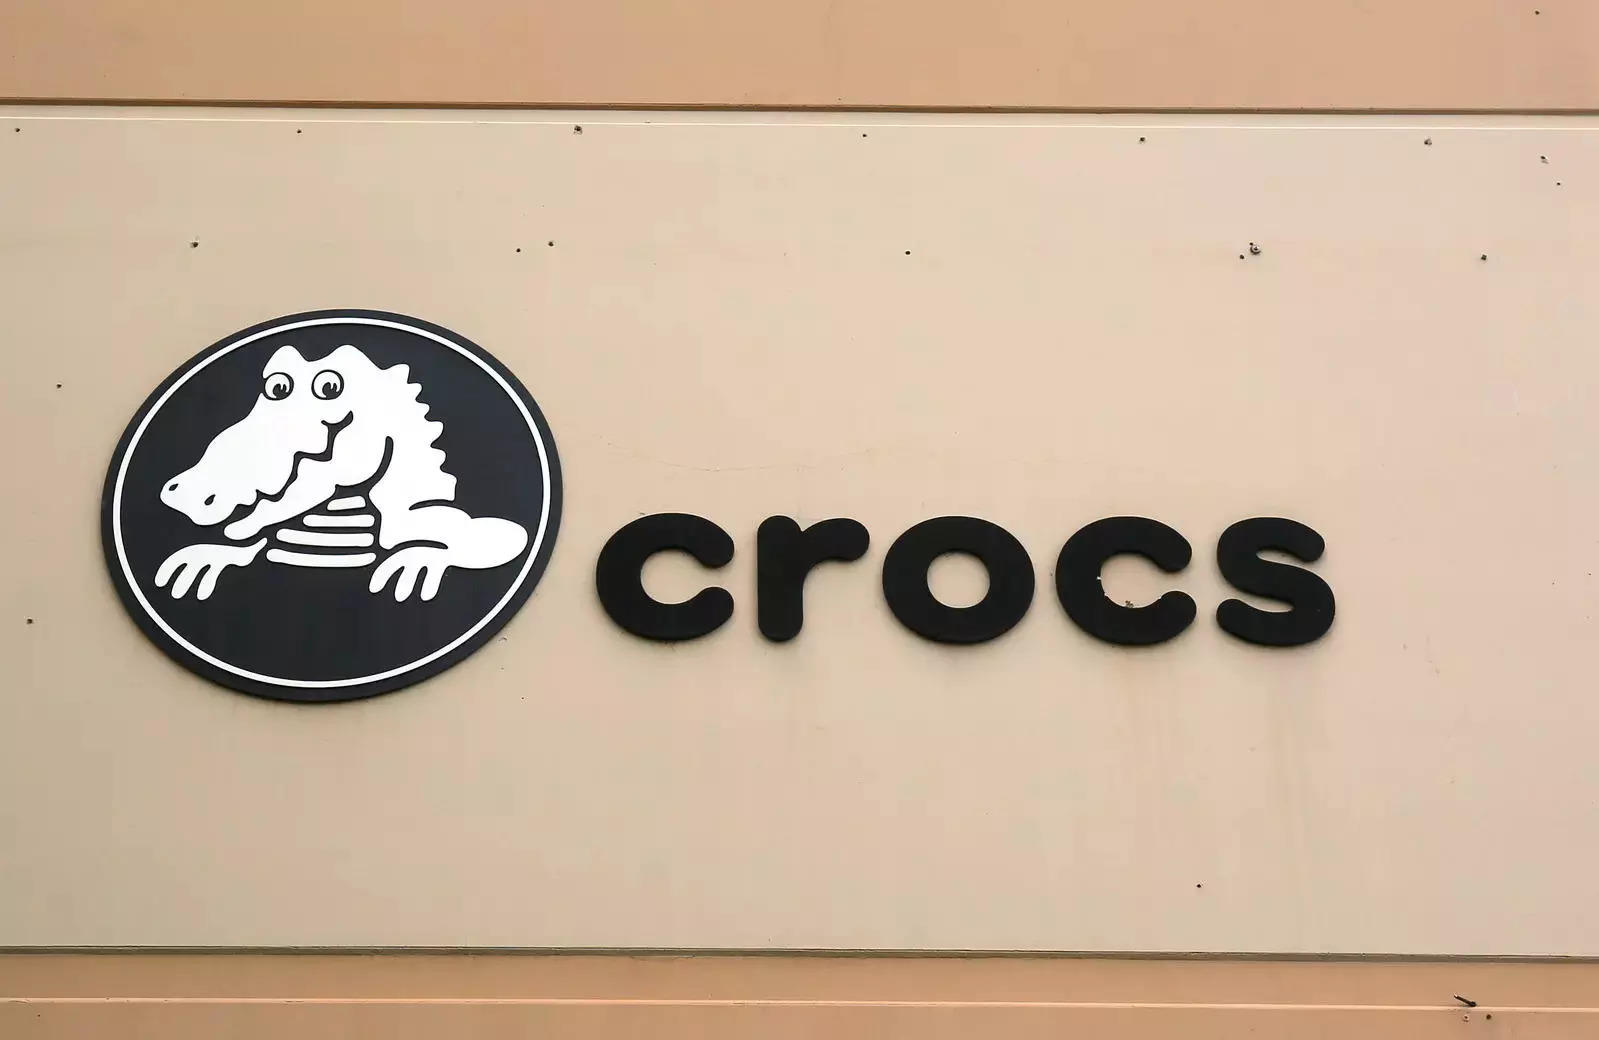 Crocs to buy footwear brand Heydude for $2.5 billion